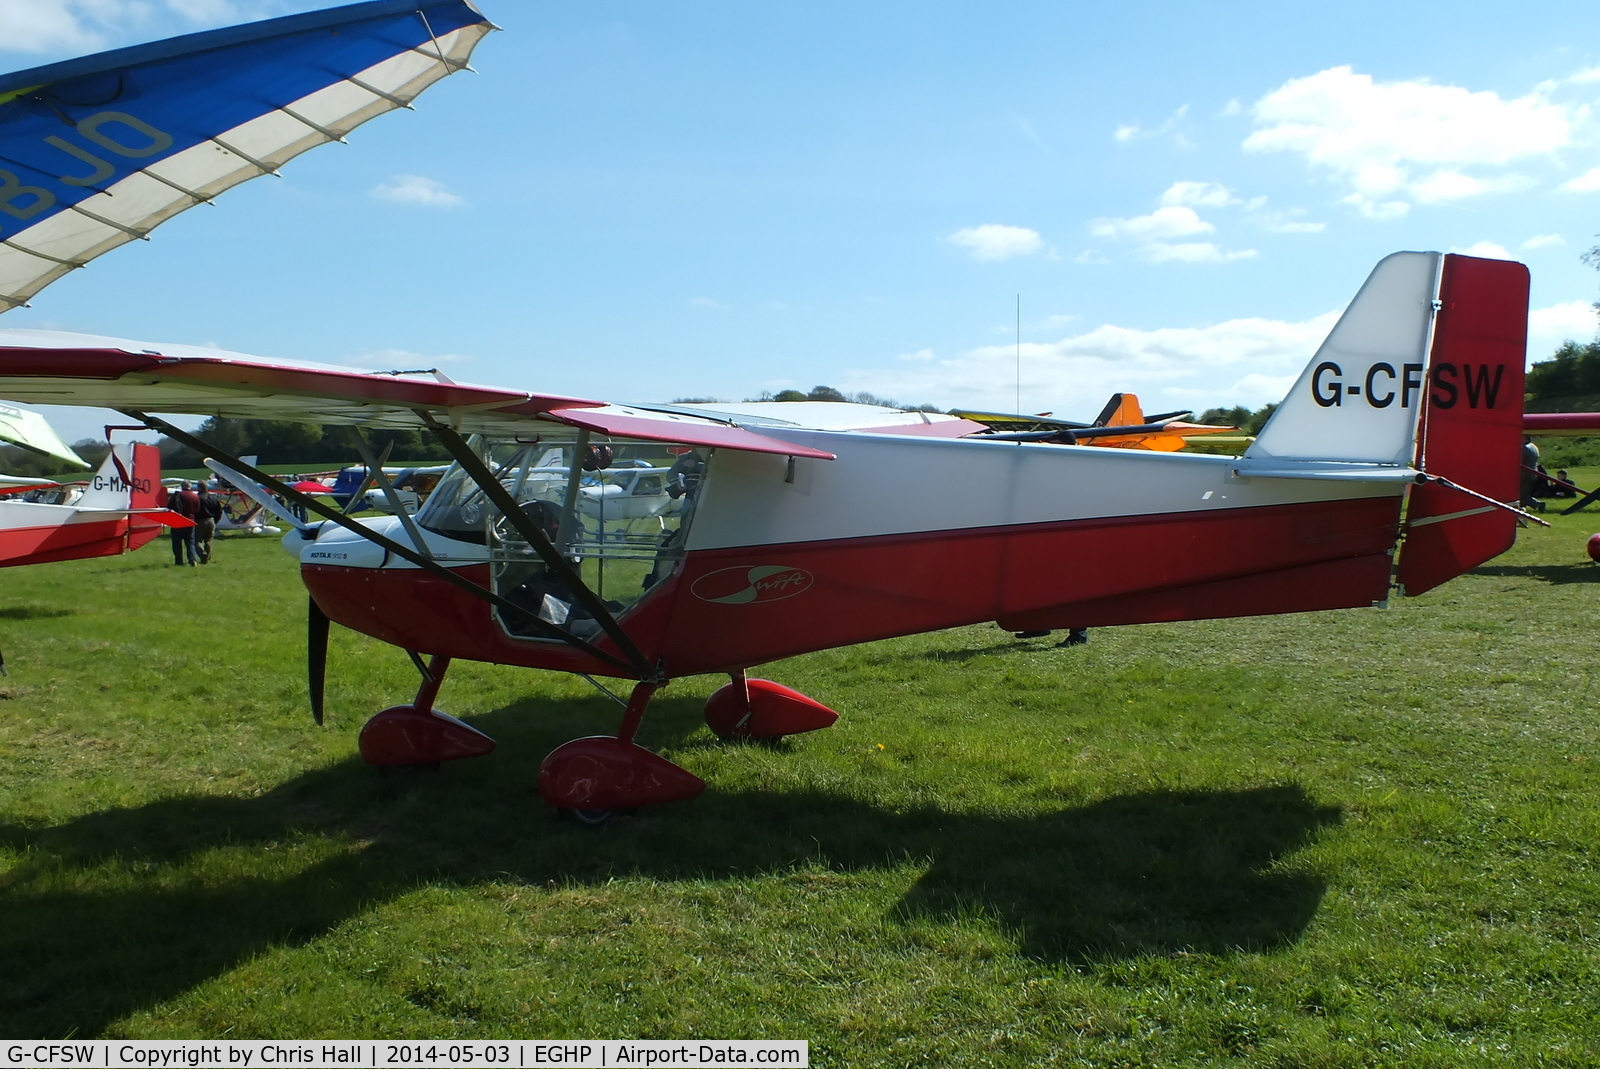 G-CFSW, 2008 Skyranger Swift 912S(1) C/N BMAA/HB/587, at the 2014 Microlight Trade Fair, Popham